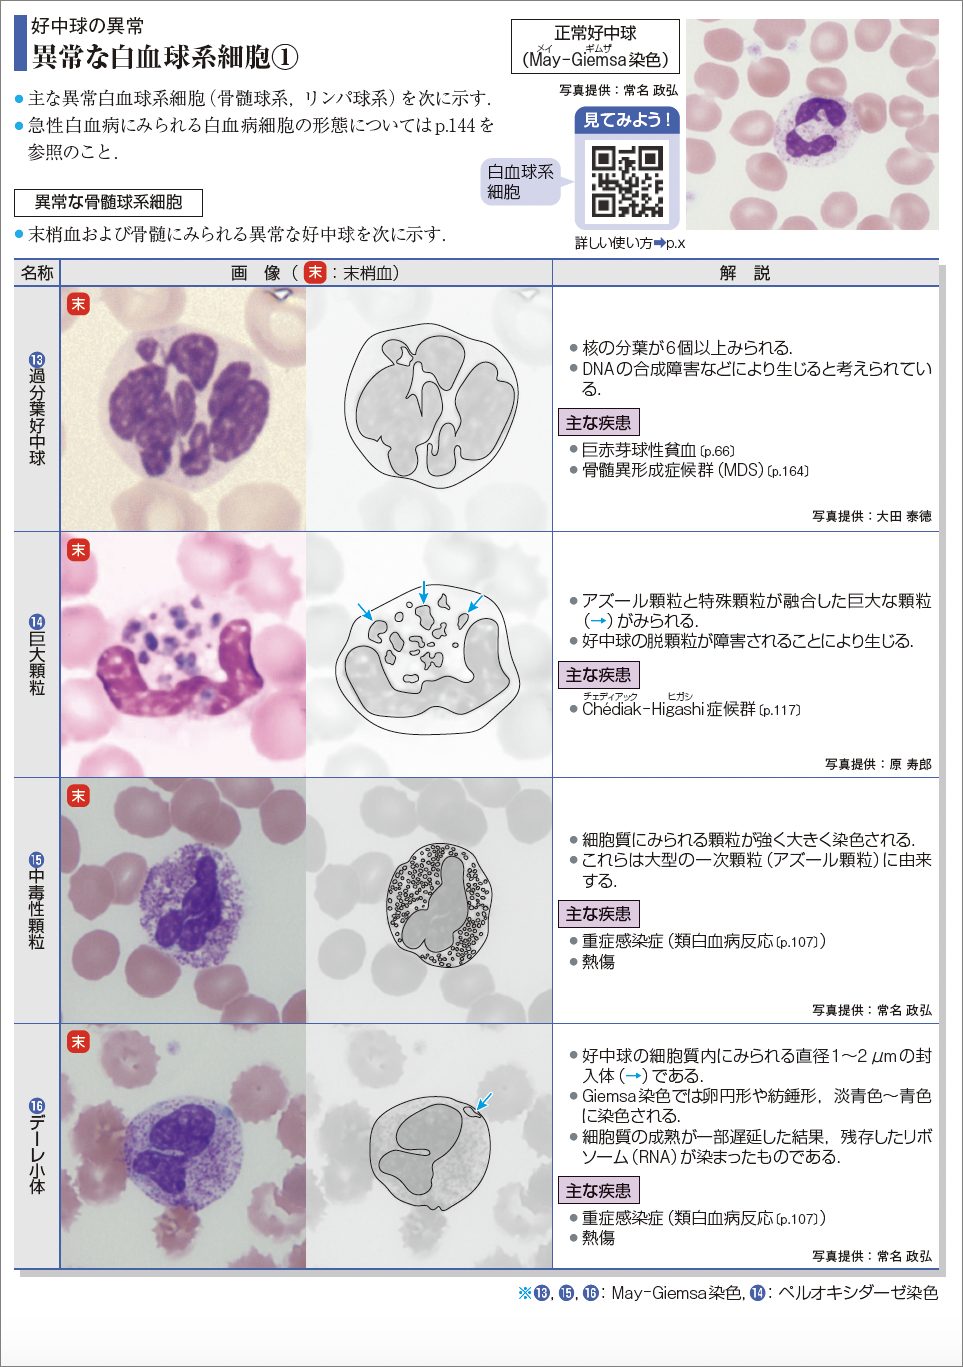 異常な白血球系細胞